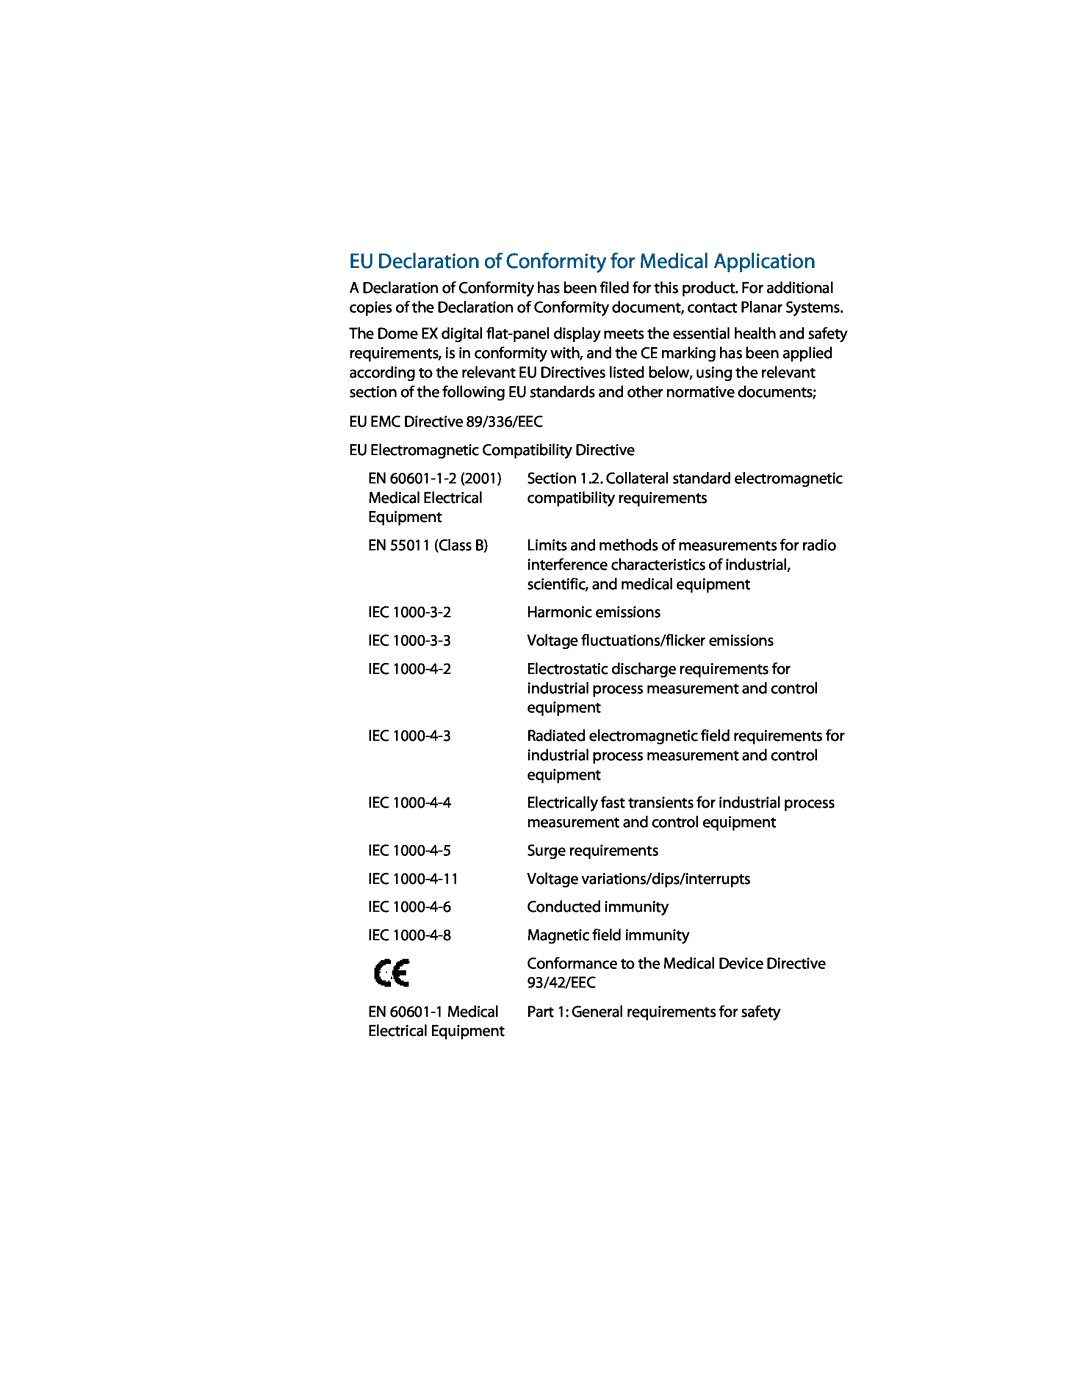 Planar E2c Display manual EU Declaration of Conformity for Medical Application 